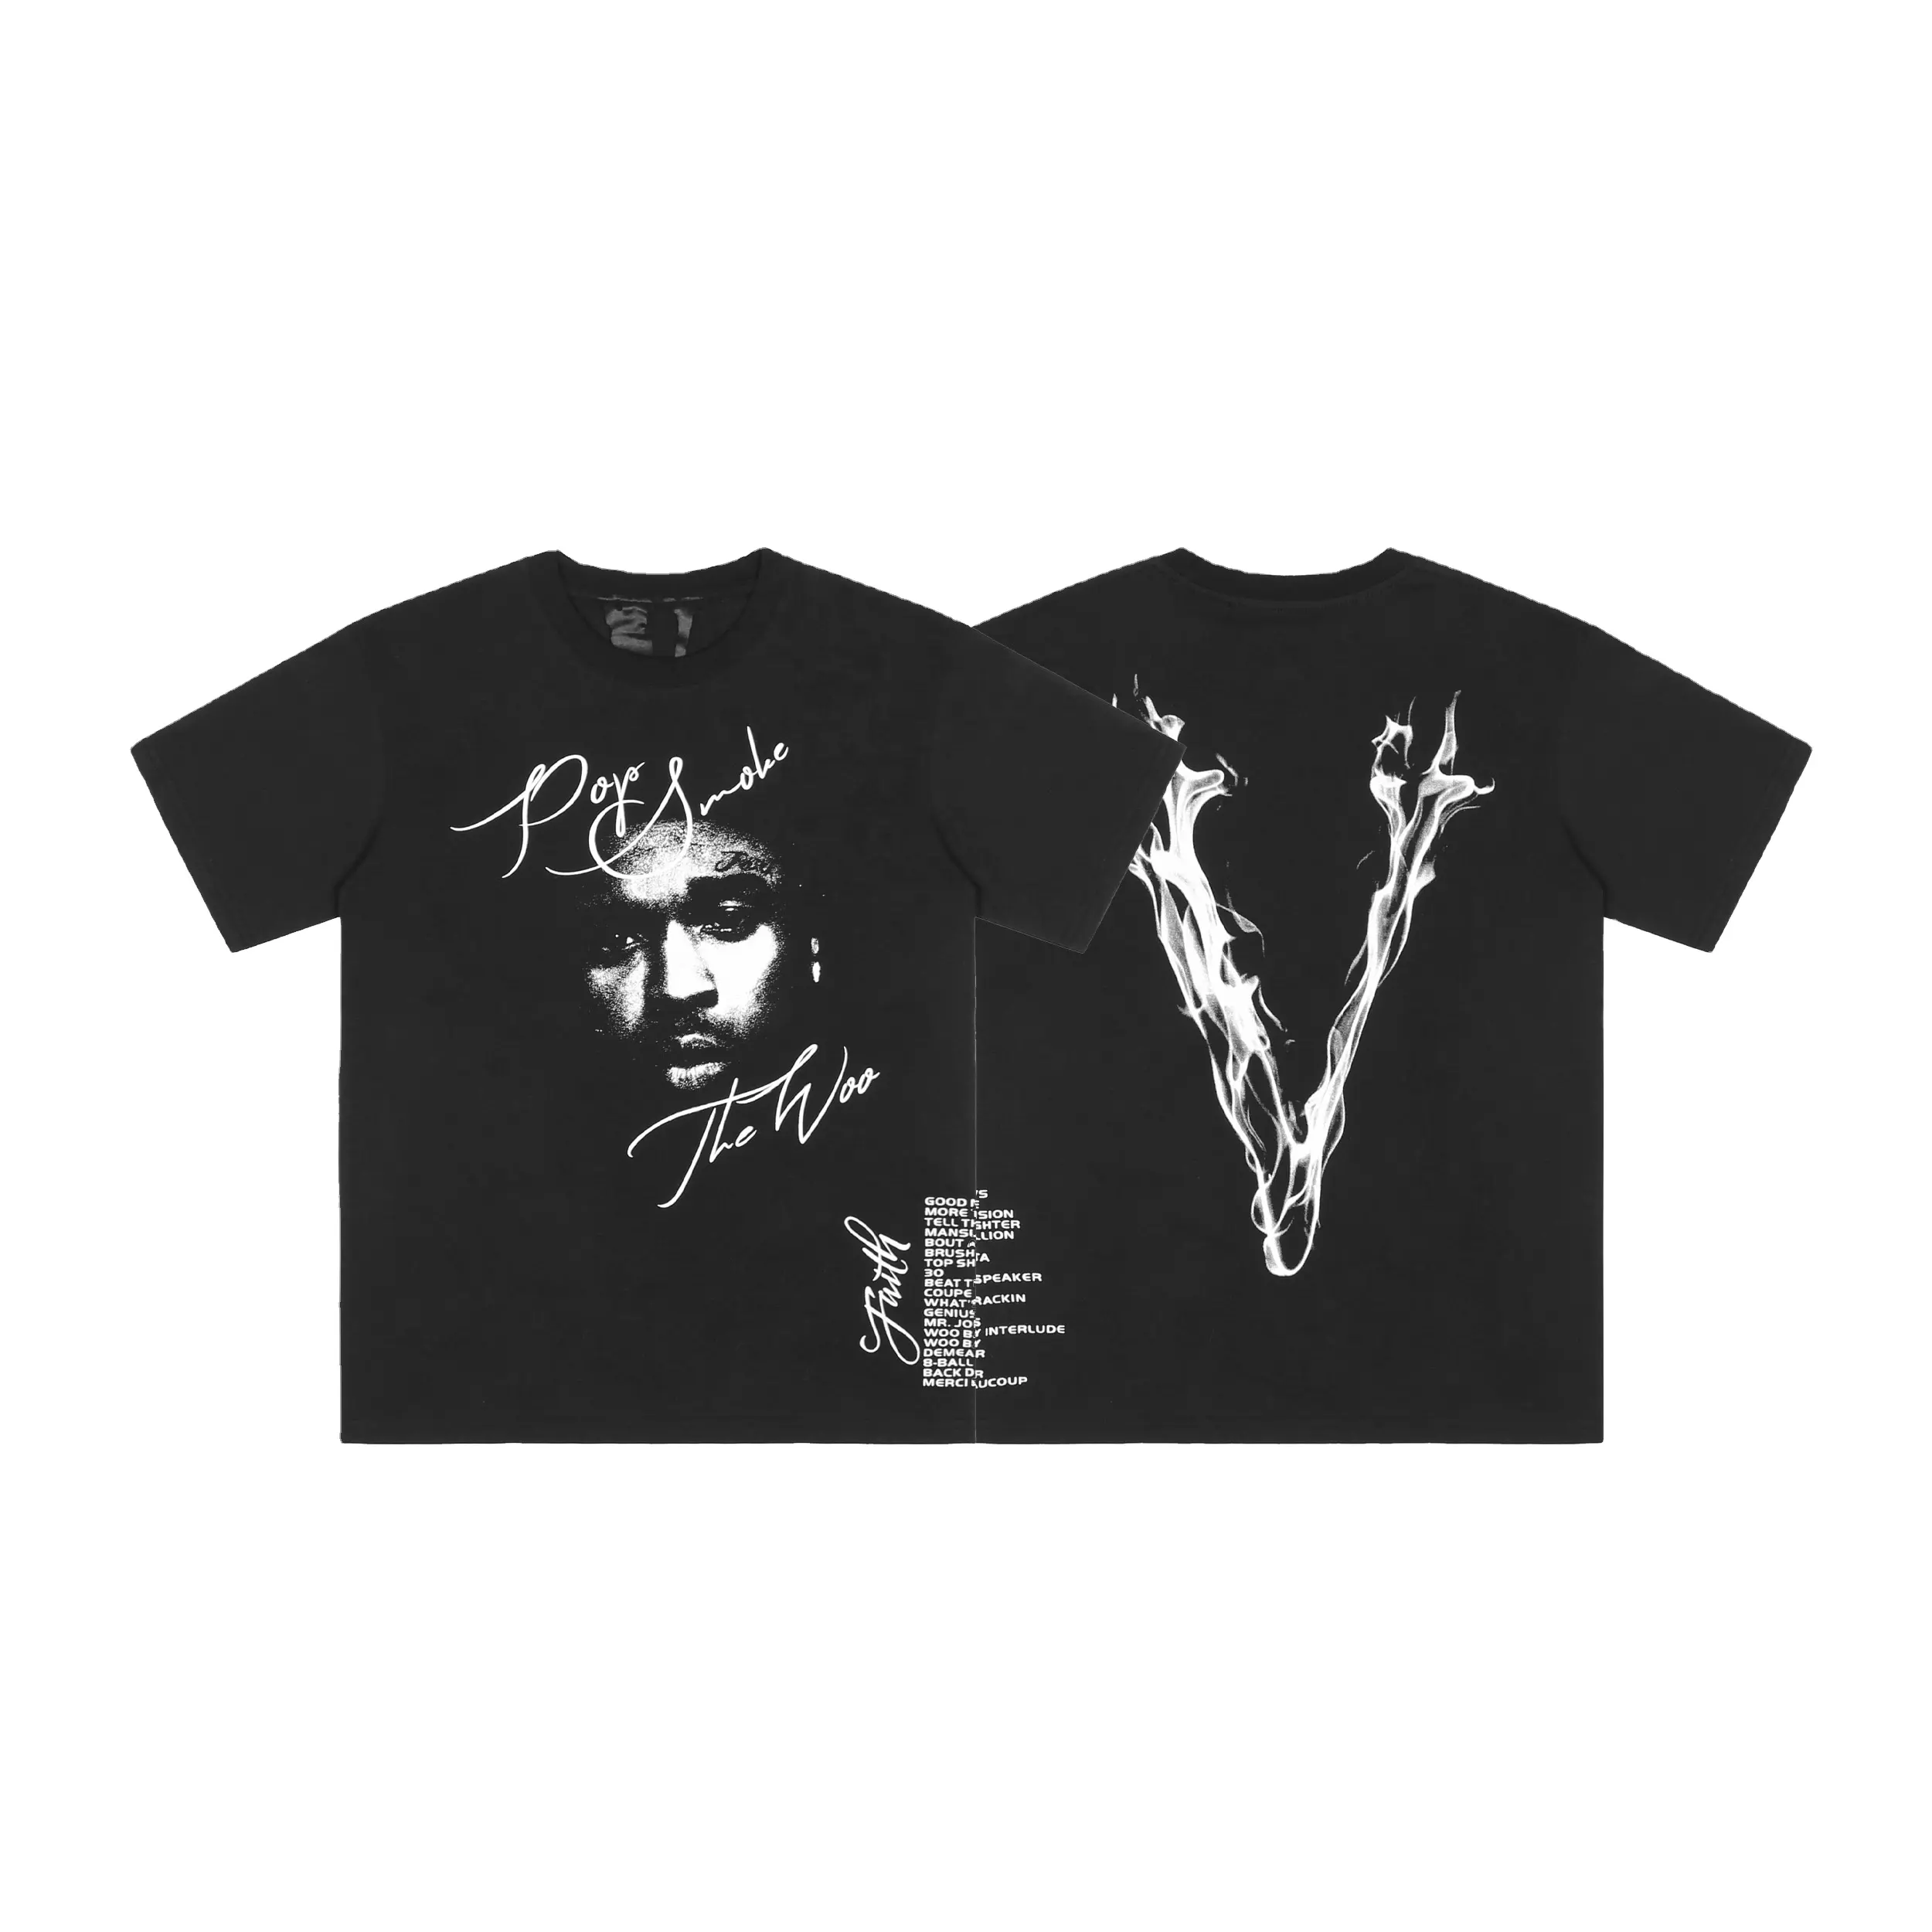 vlones new style high-quality men's T-shirt portrait high-definition digital printing cotton shirt punk rock style tee